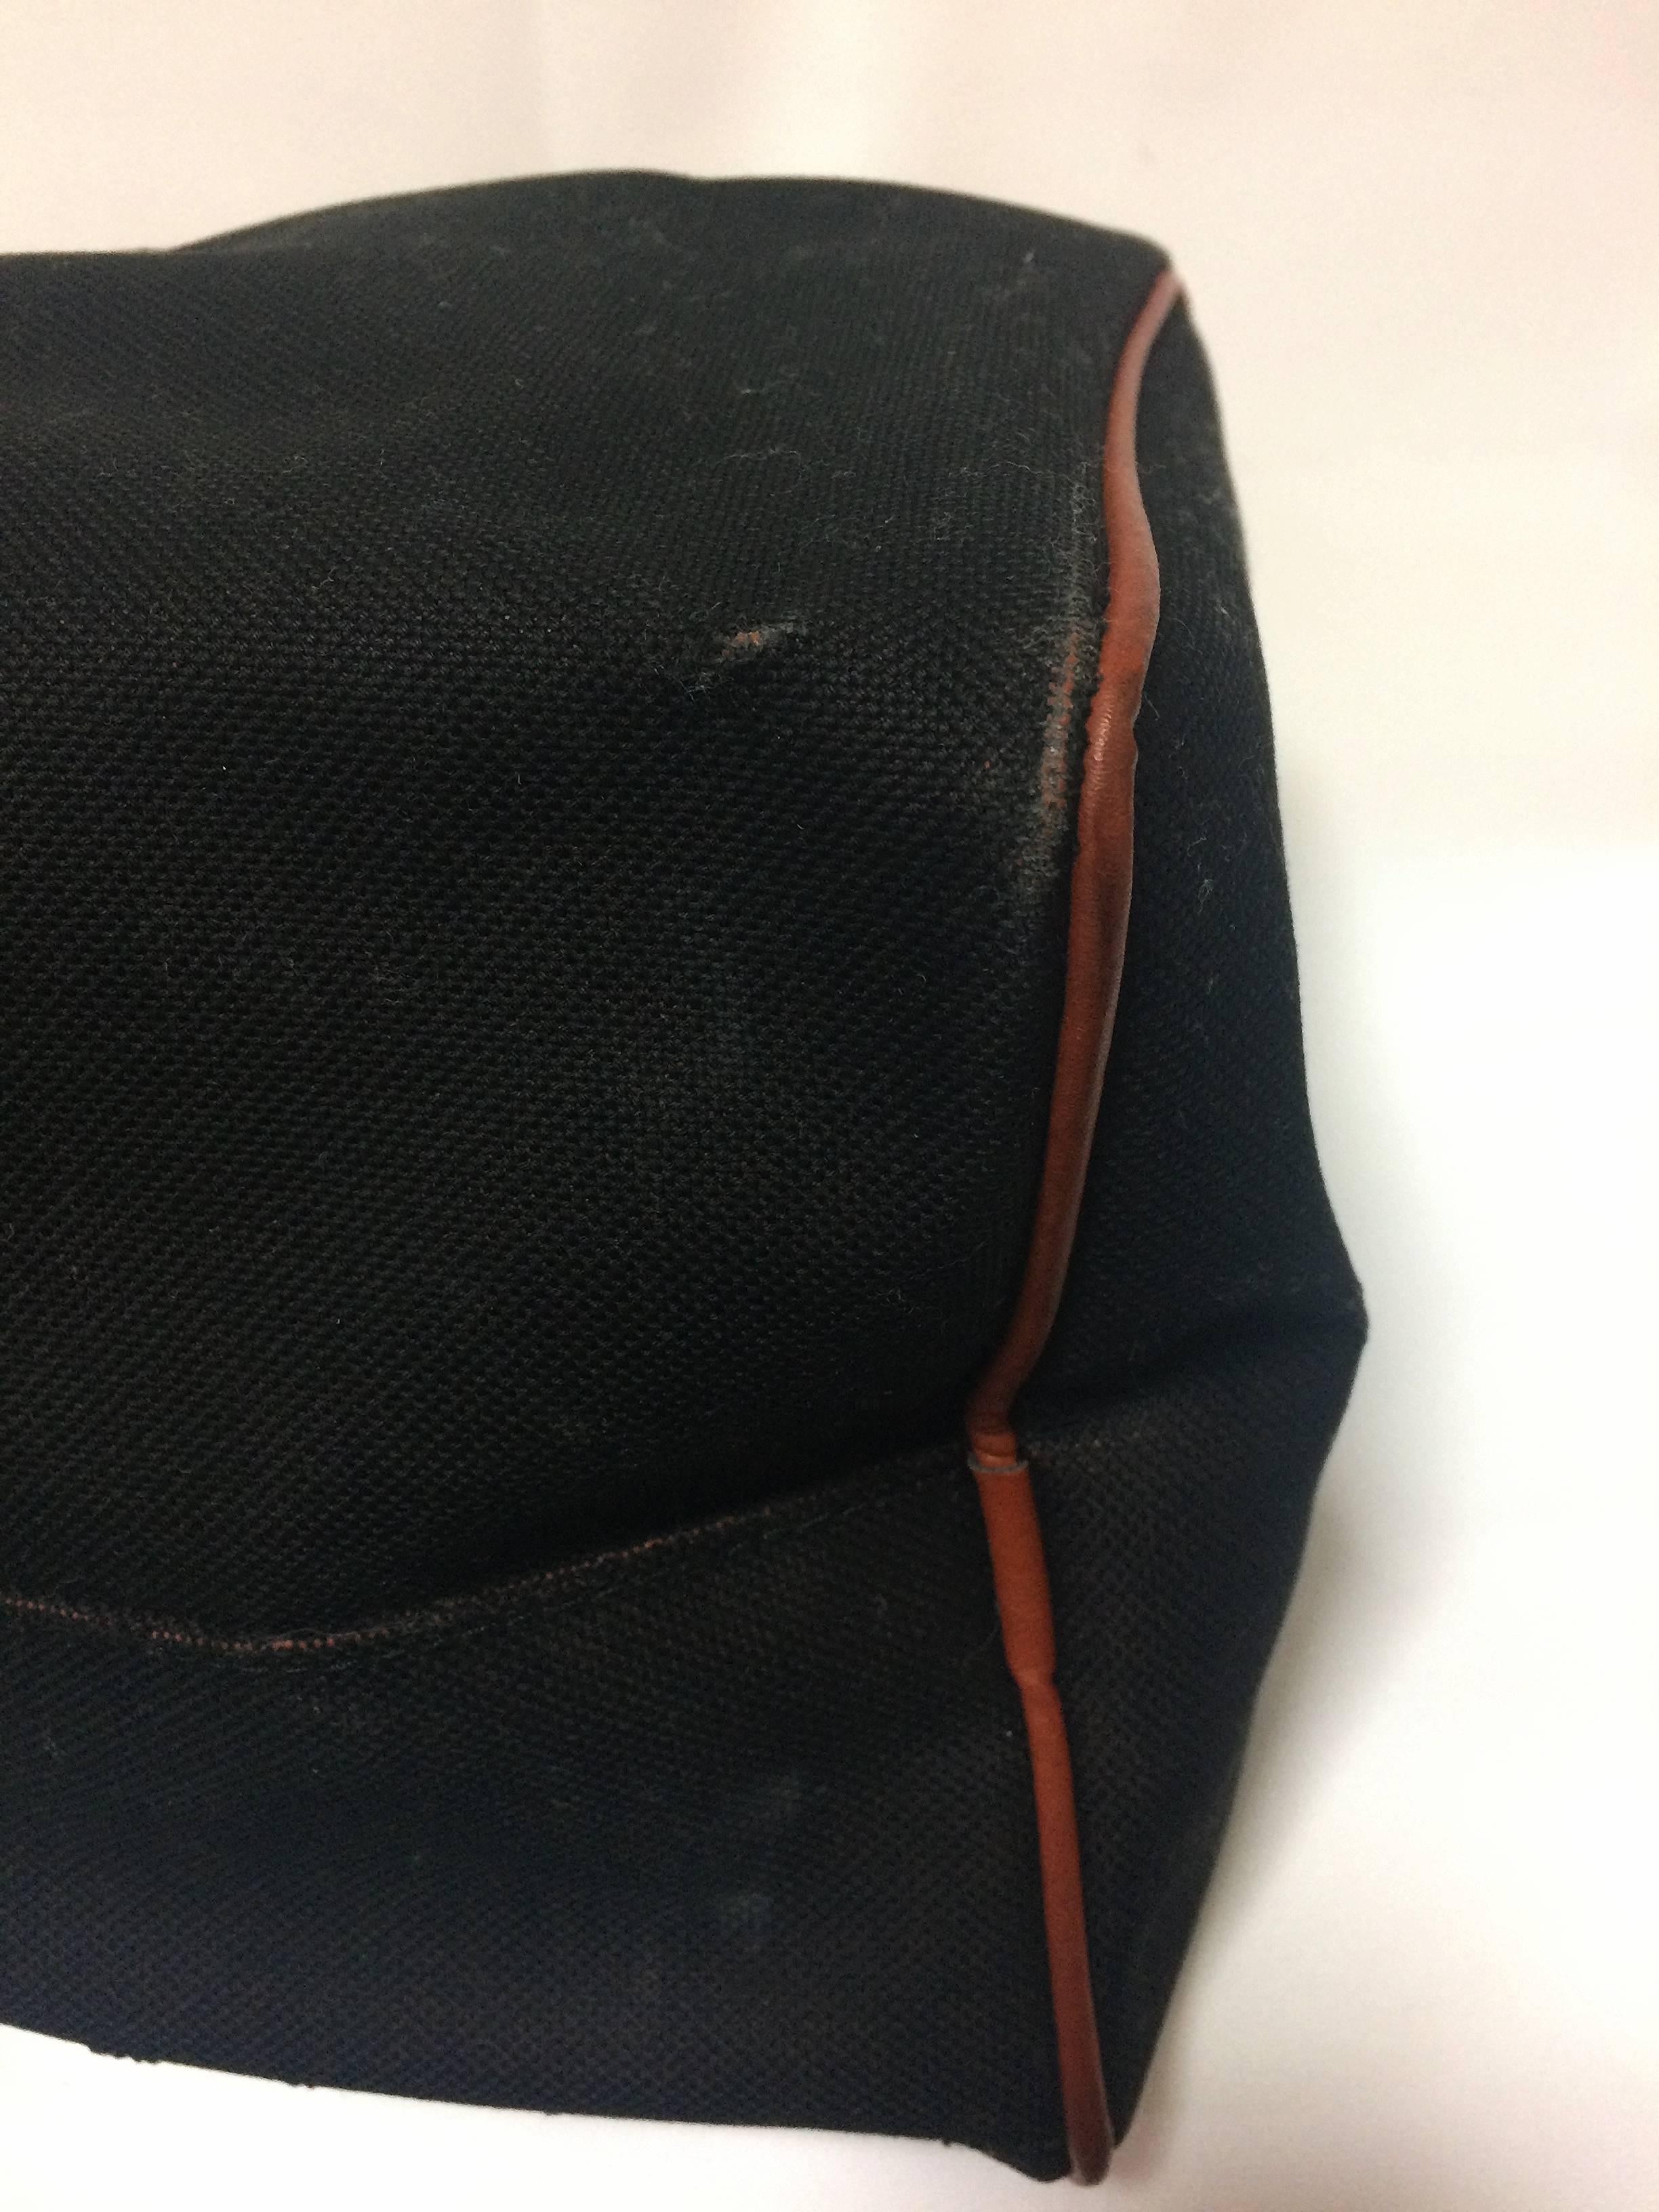 Black Vintage Yves Saint Laurent black and brown canvas duffle handbag, travel bag